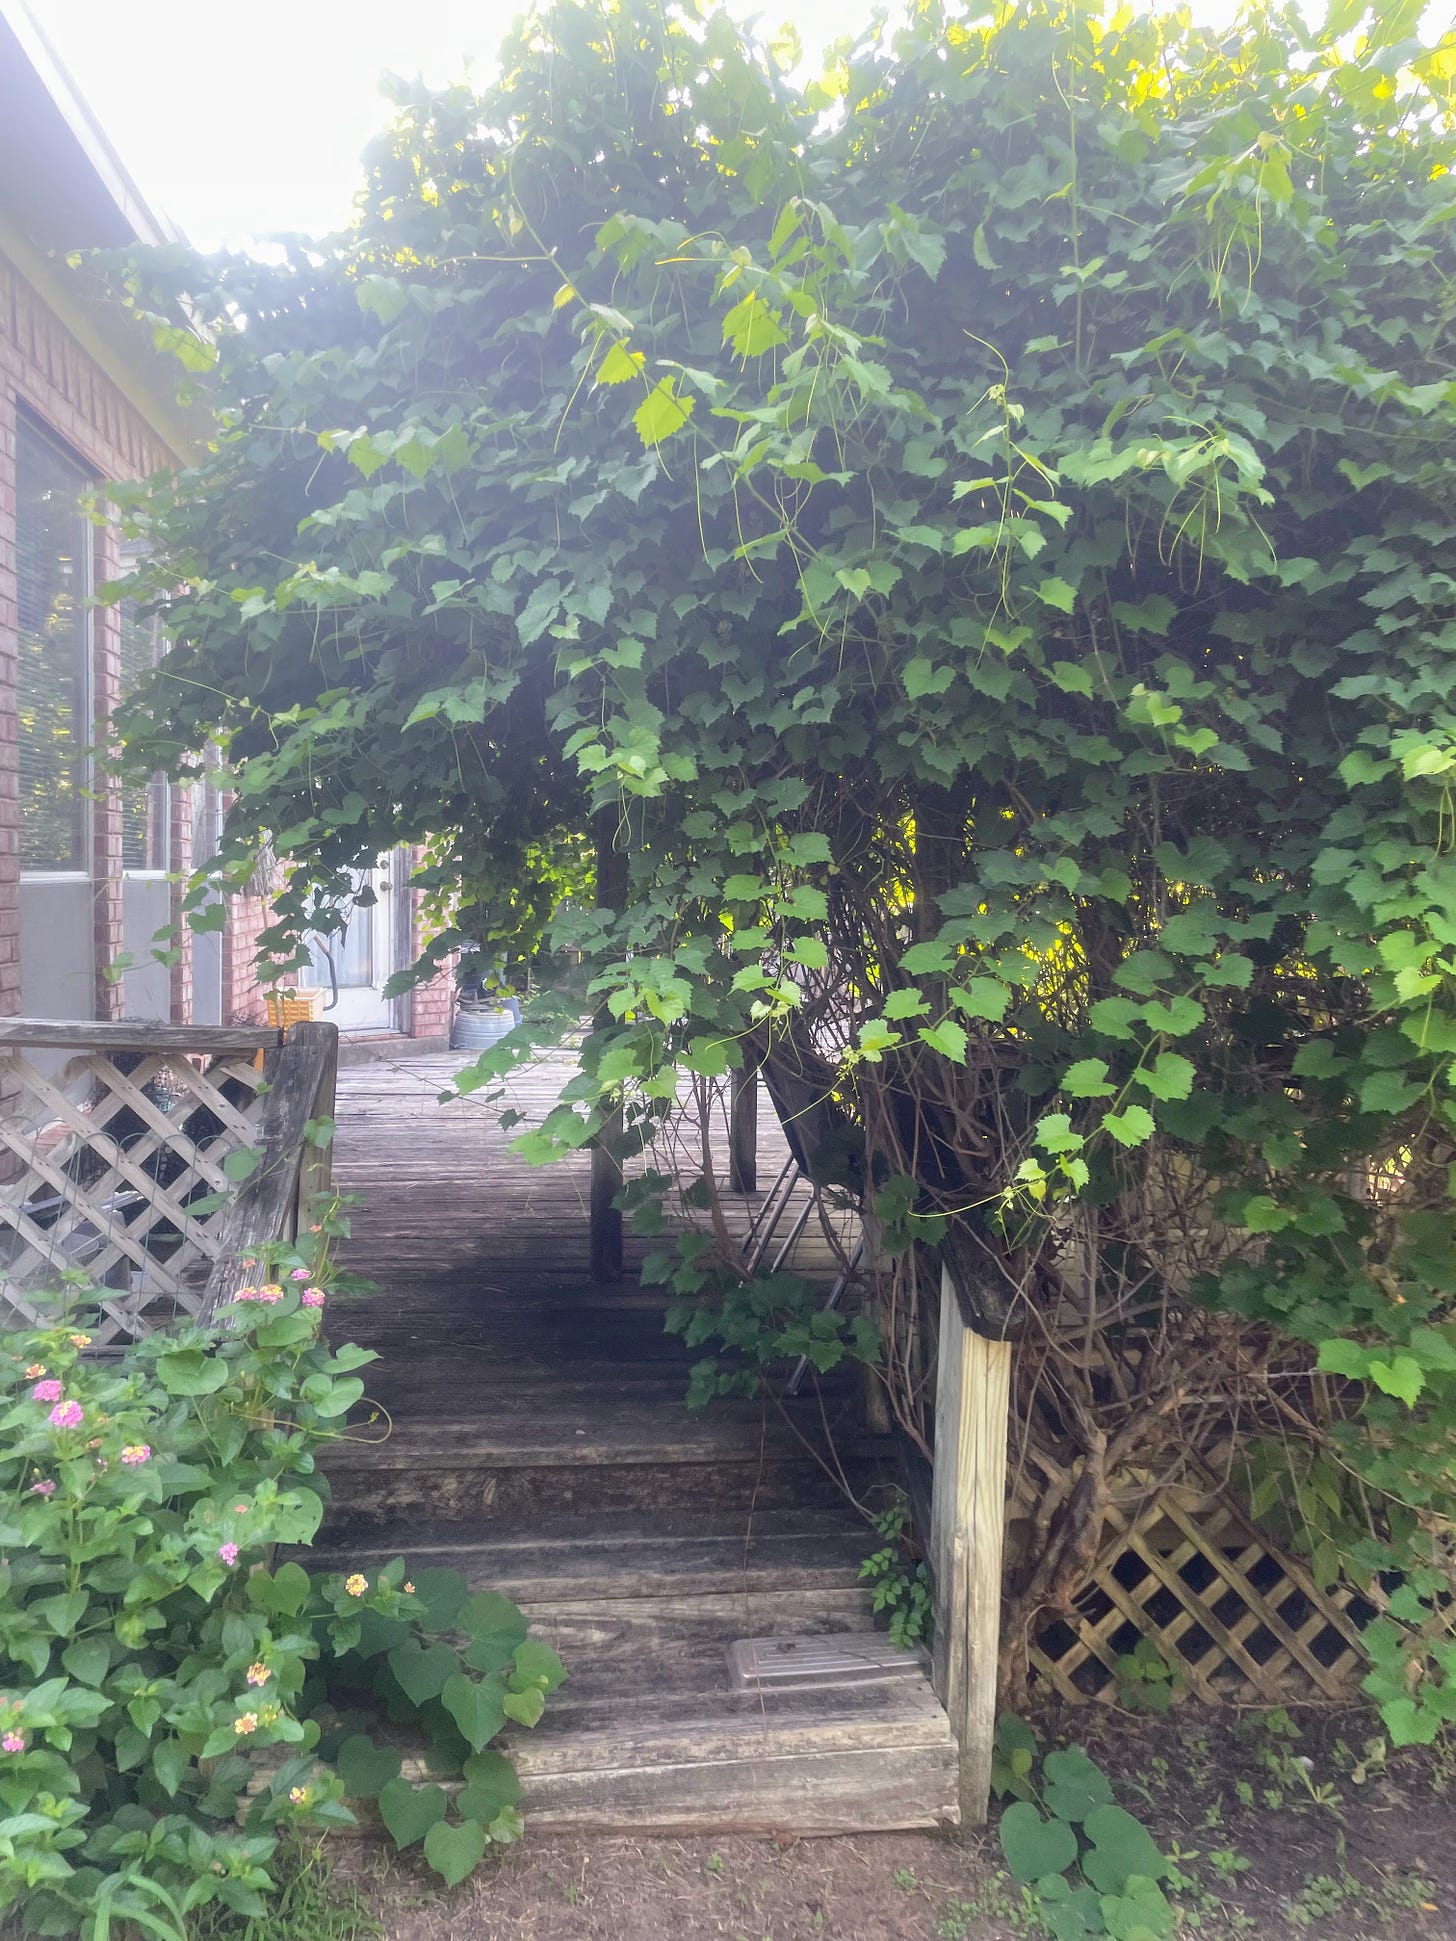 Overgrown plants shroud a wooden deck.